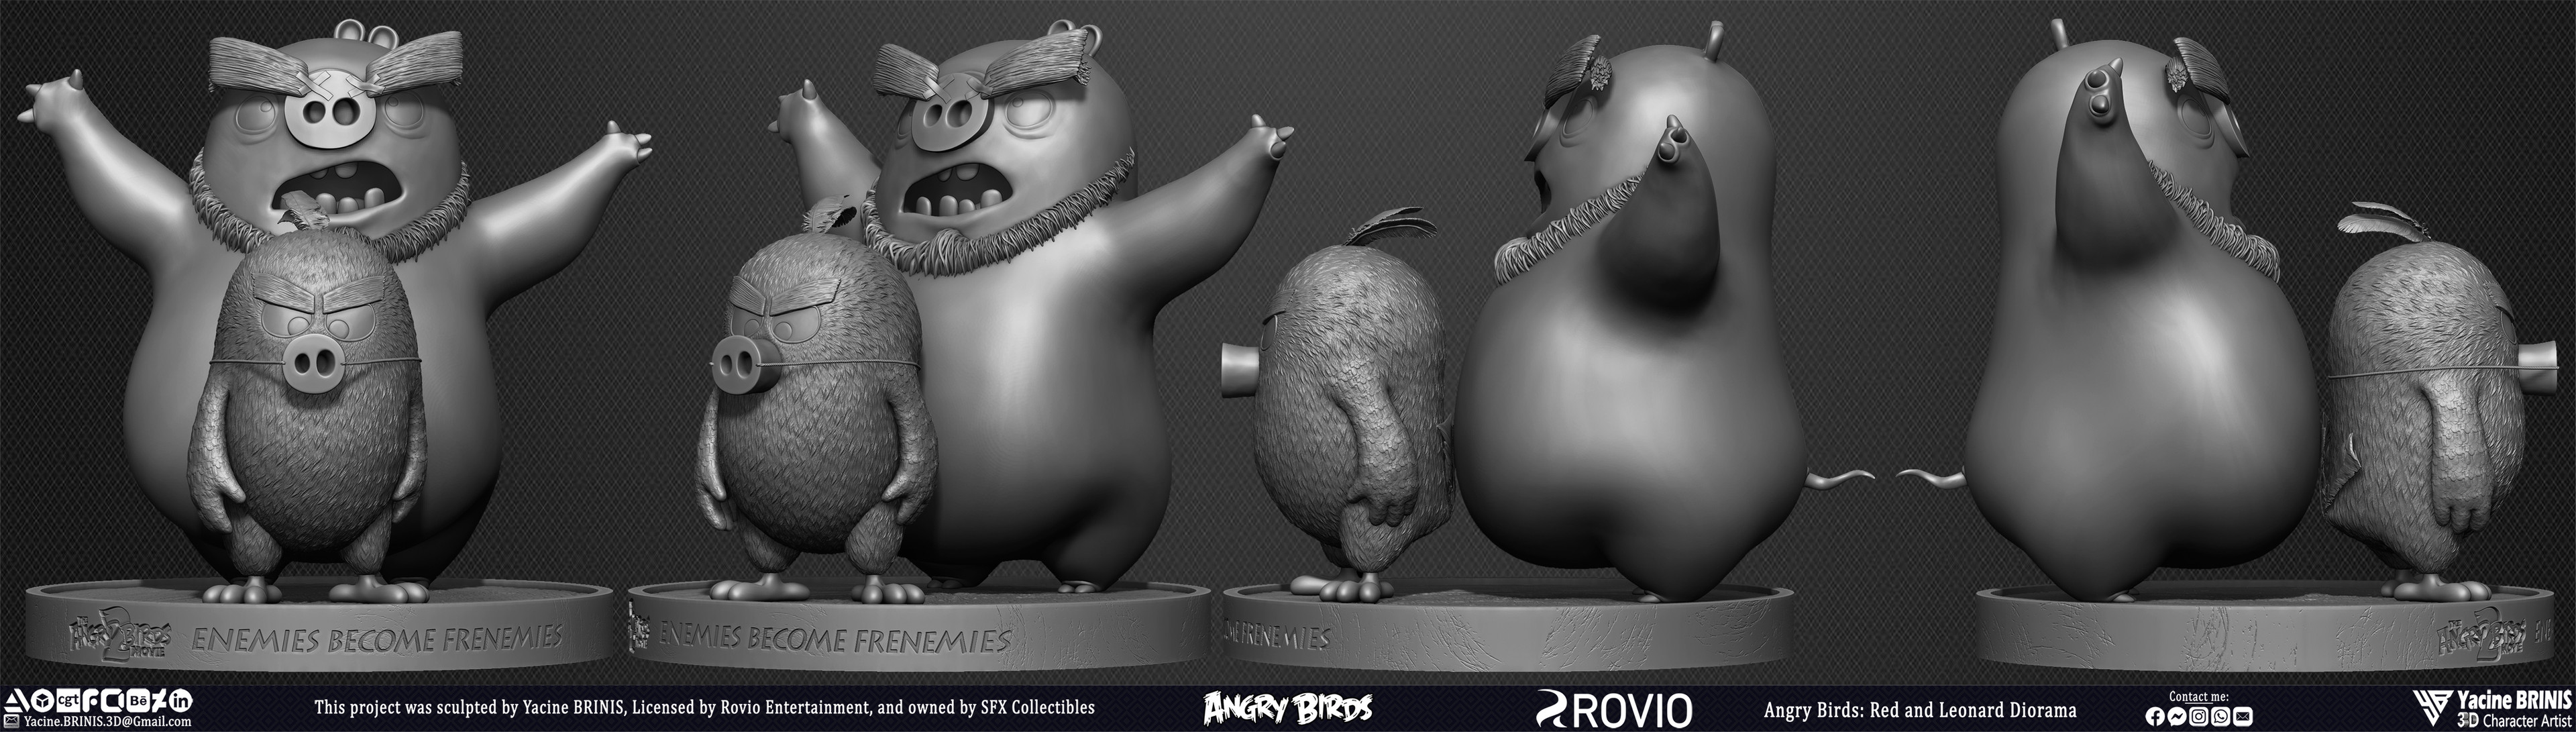 Red and Leonard Diorama Angry Birds movie 02 Rovio Entertainment sculpted by Yacine BRINIS 002